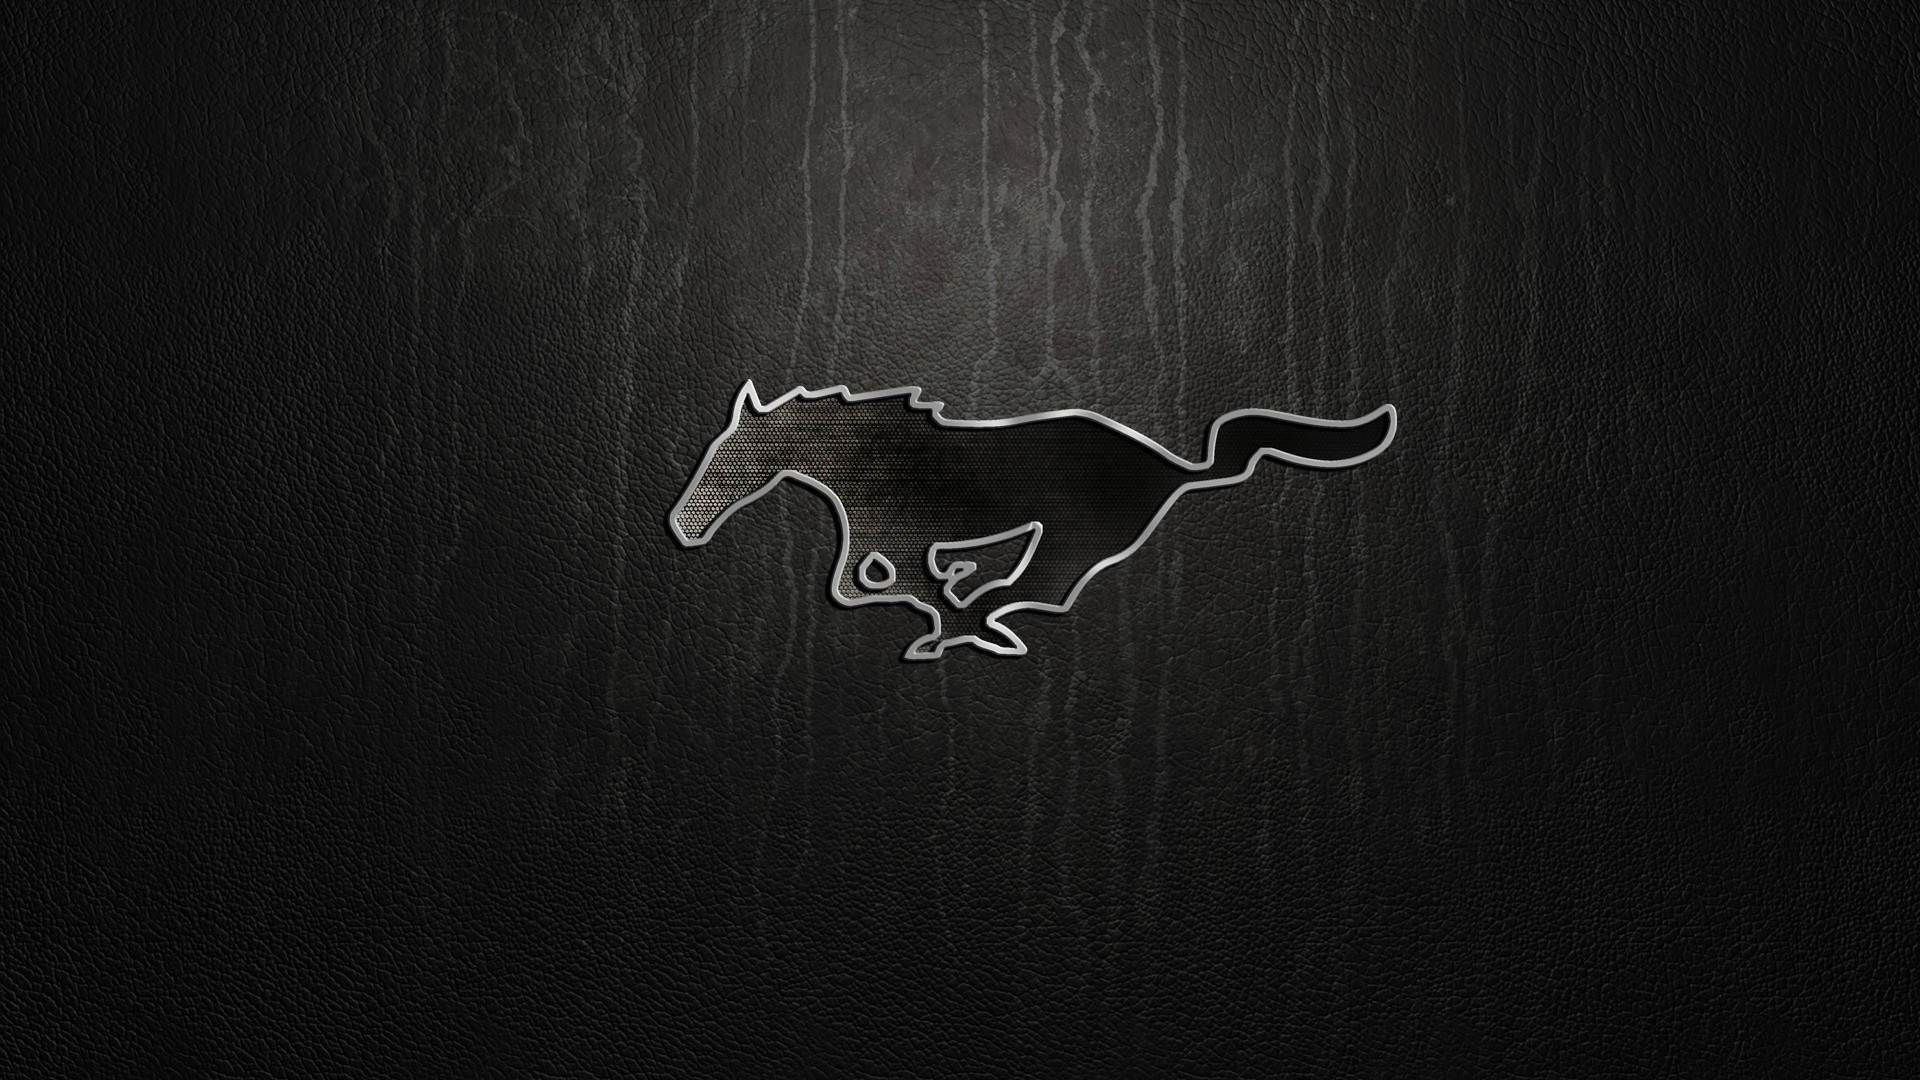 Mustang Hd Logo Dark Leather Background